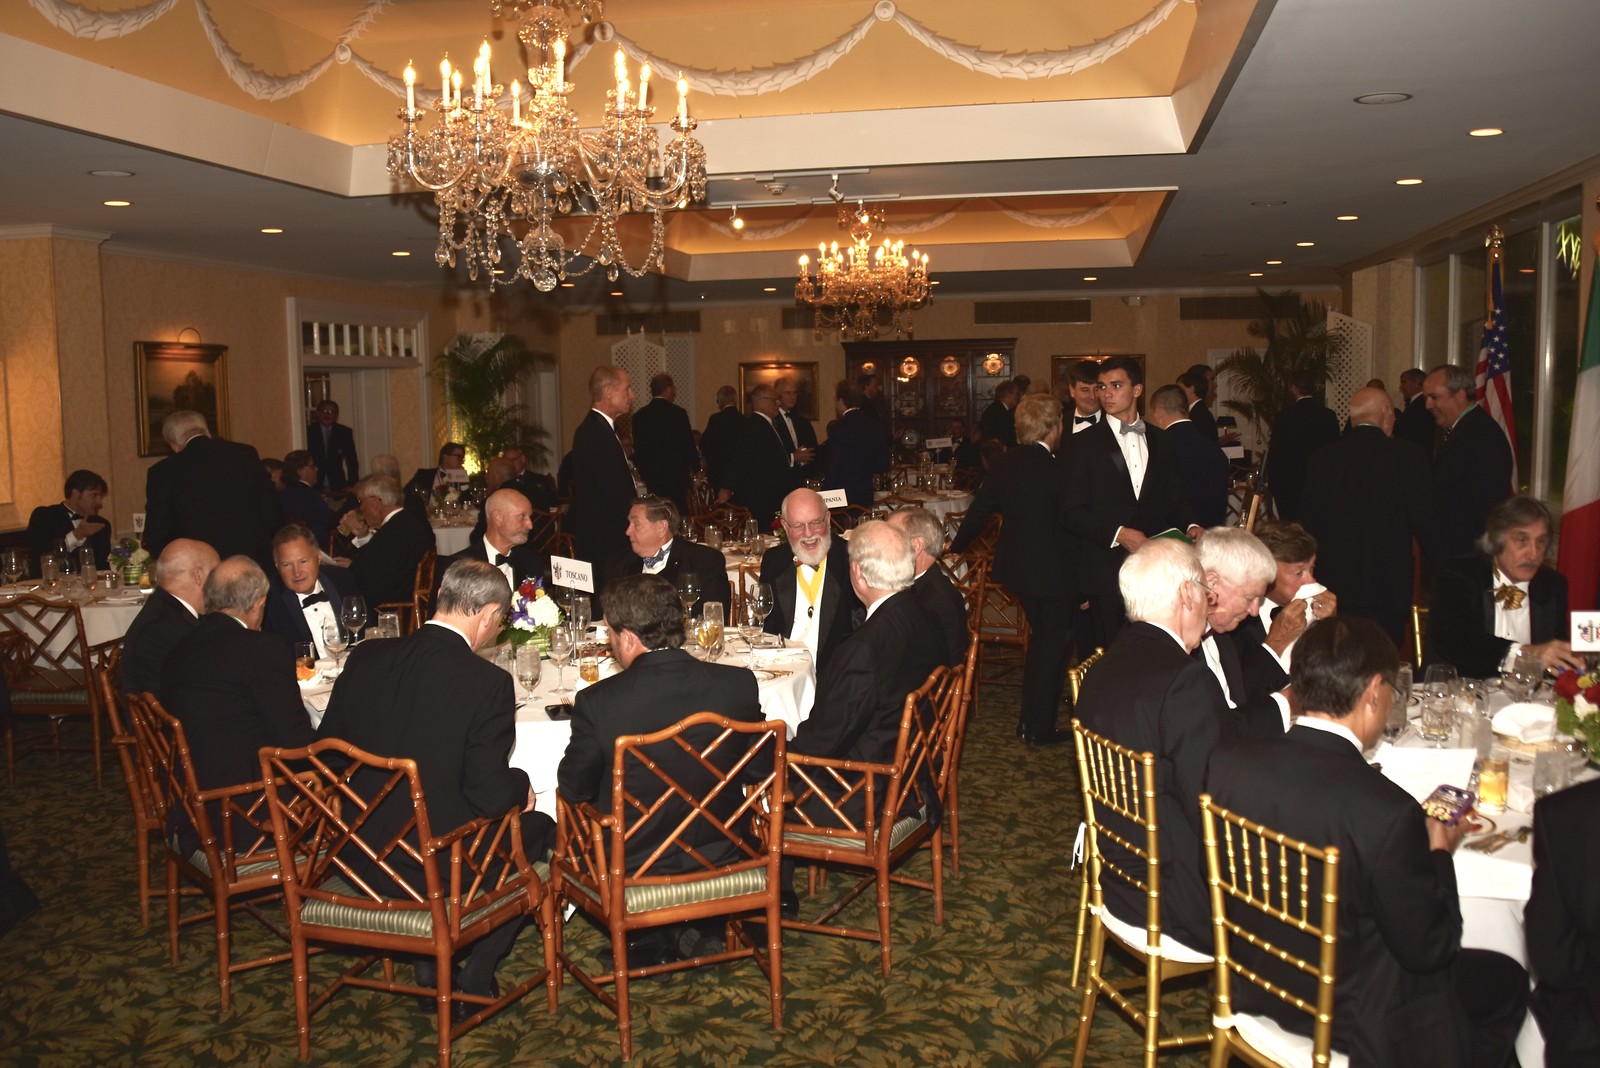 The Italian Society of Savannah’s Columbus Day Banquet